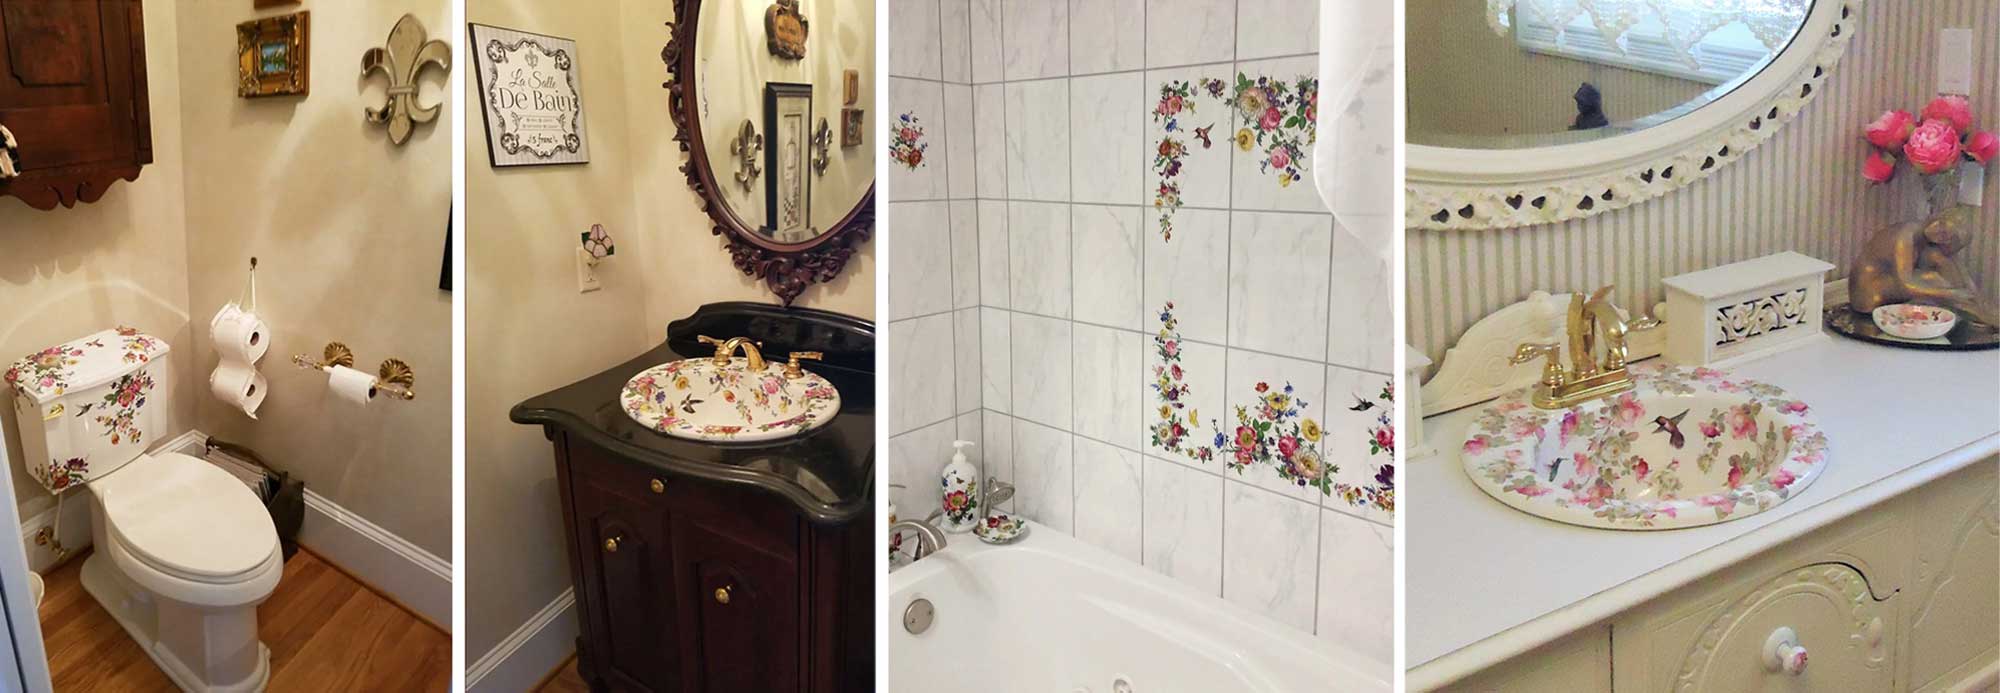 decorated bathroom installation gallery tile mural, kohler painted toilet, elegant powder room and victorian bathroom with pink roses painted sink.